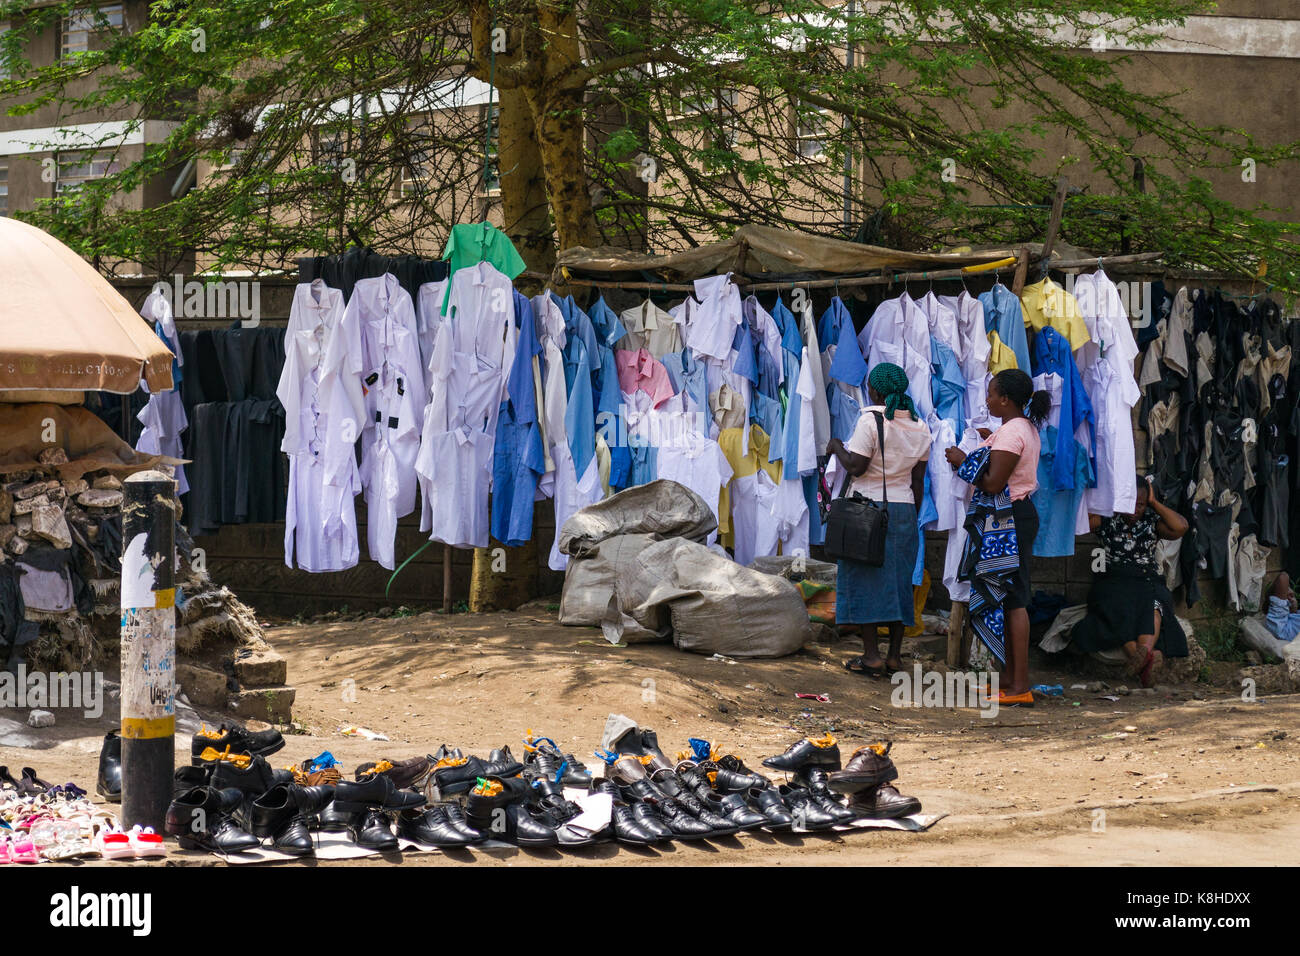 Women browse childrens school clothes on dispay by roadside, Nairobi, Kenya Stock Photo